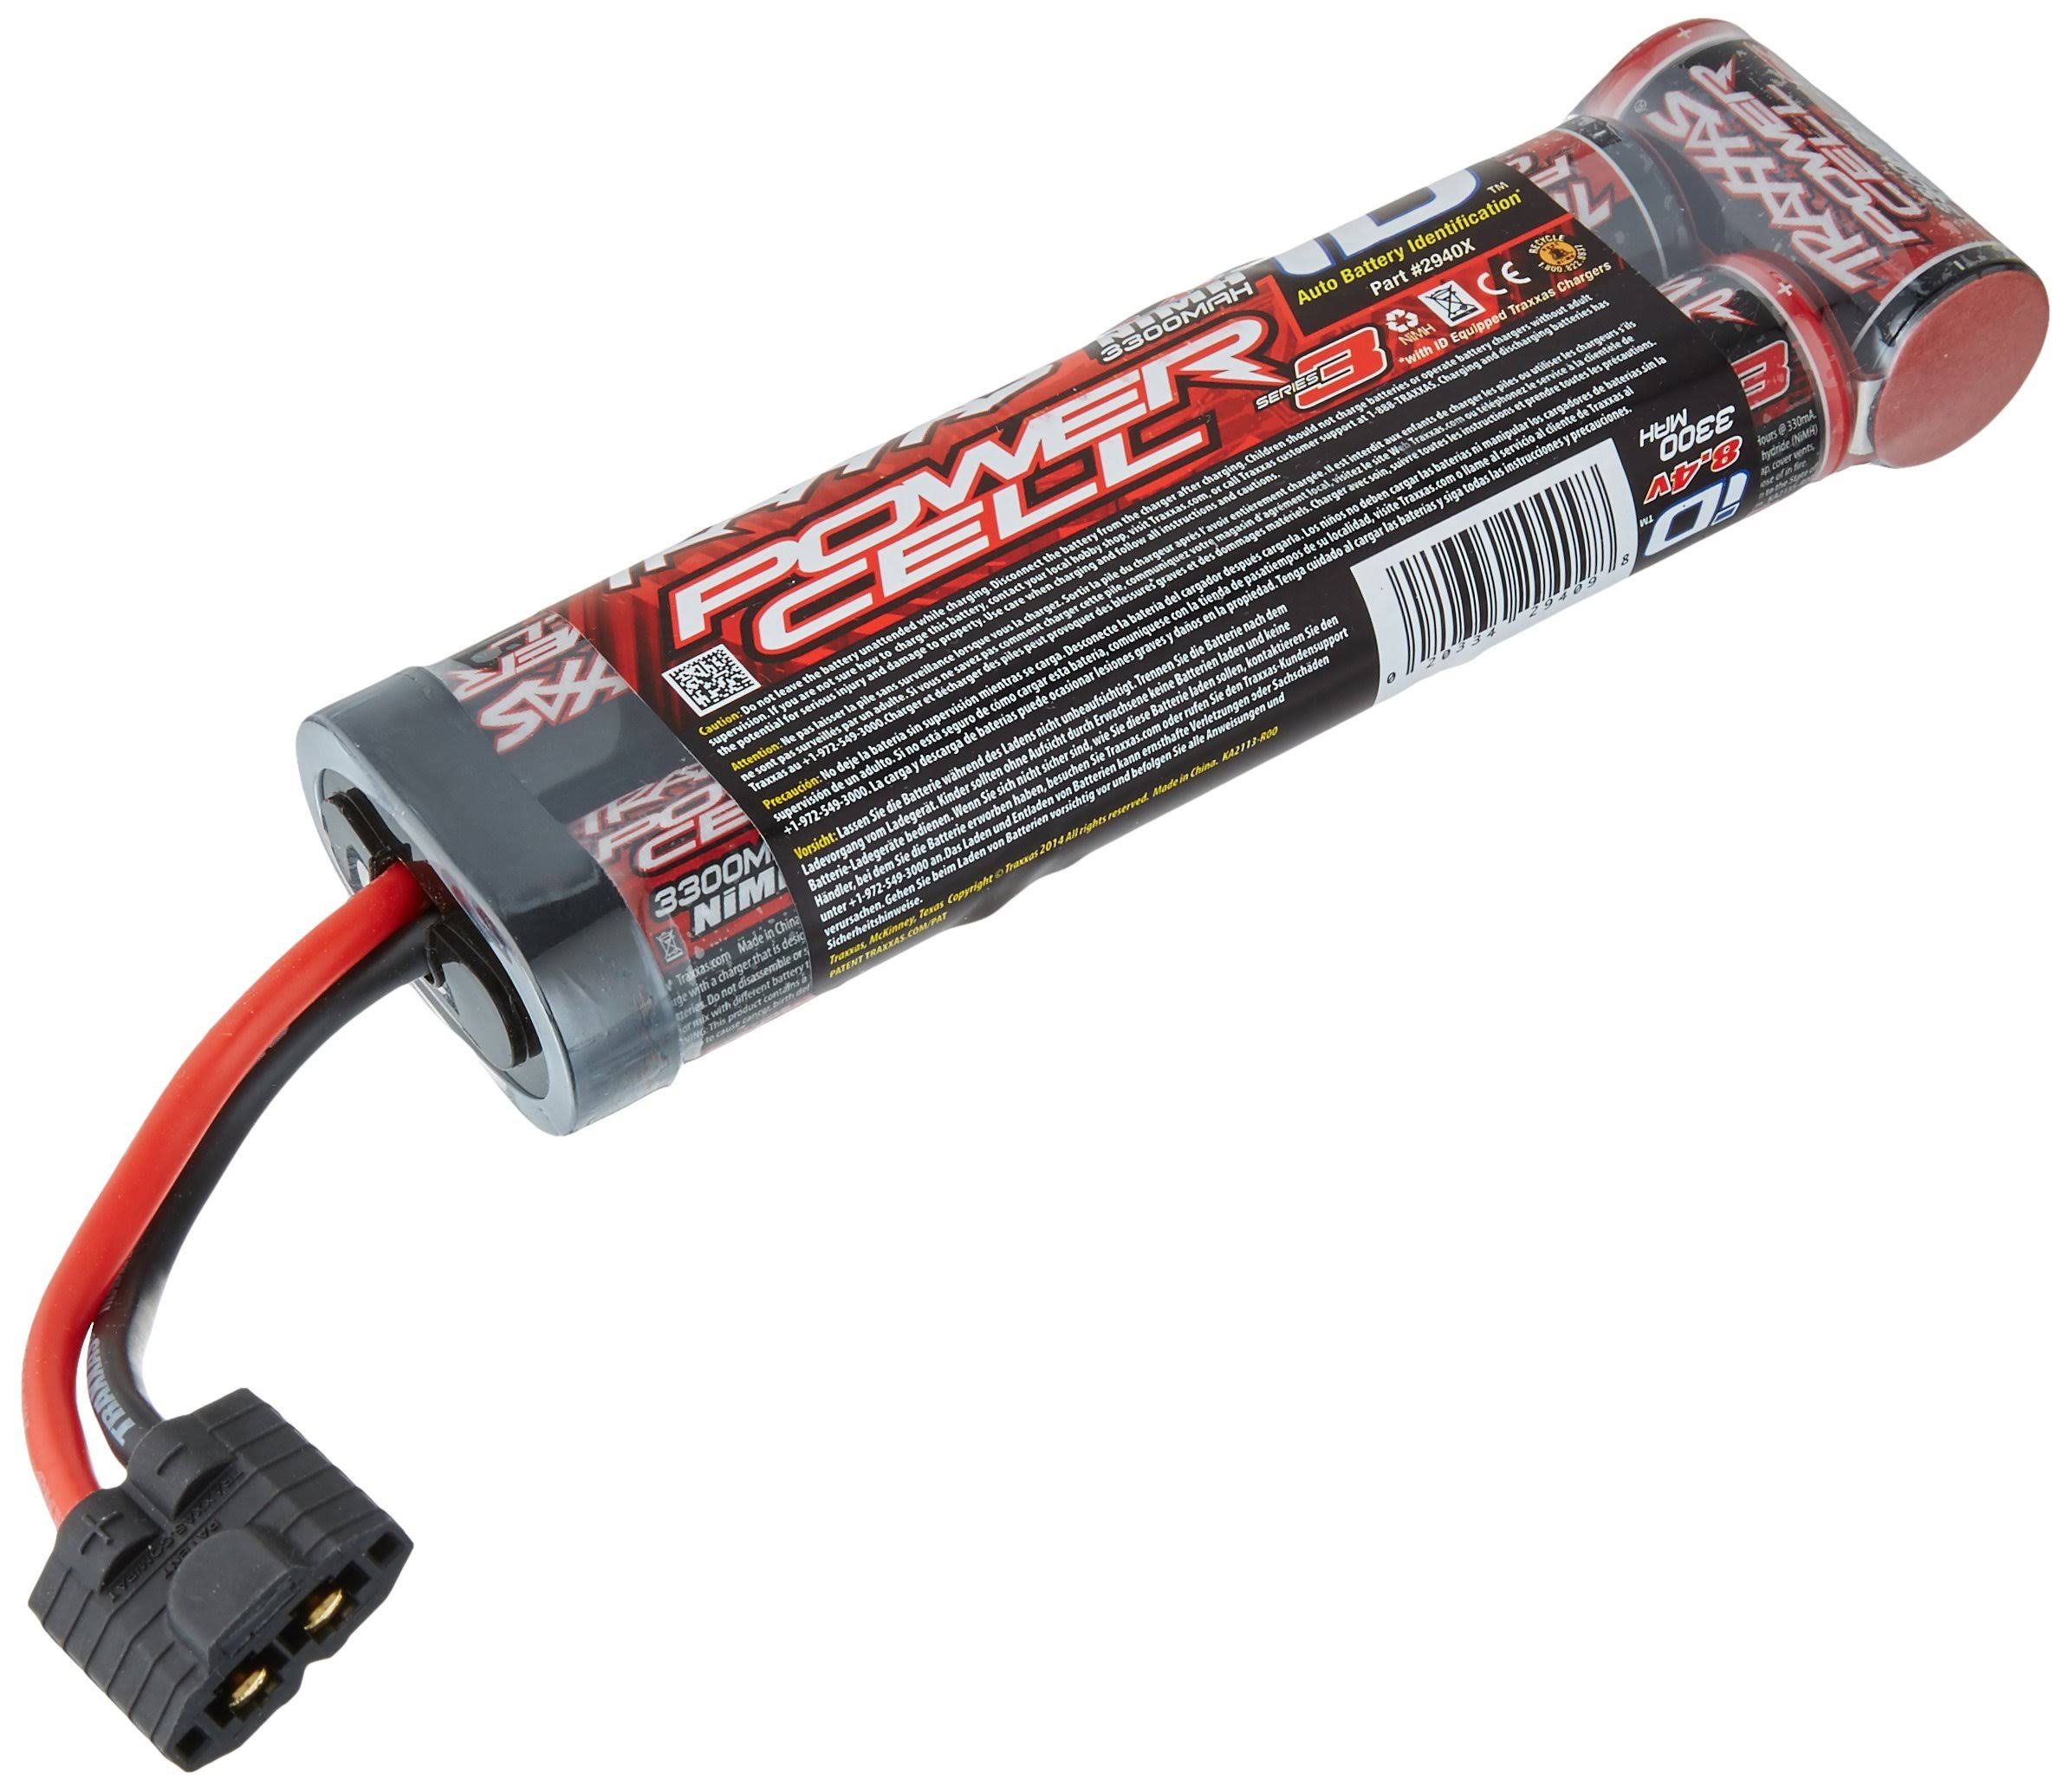 Traxxas Power Cell NiMH Battery - 3300mAh